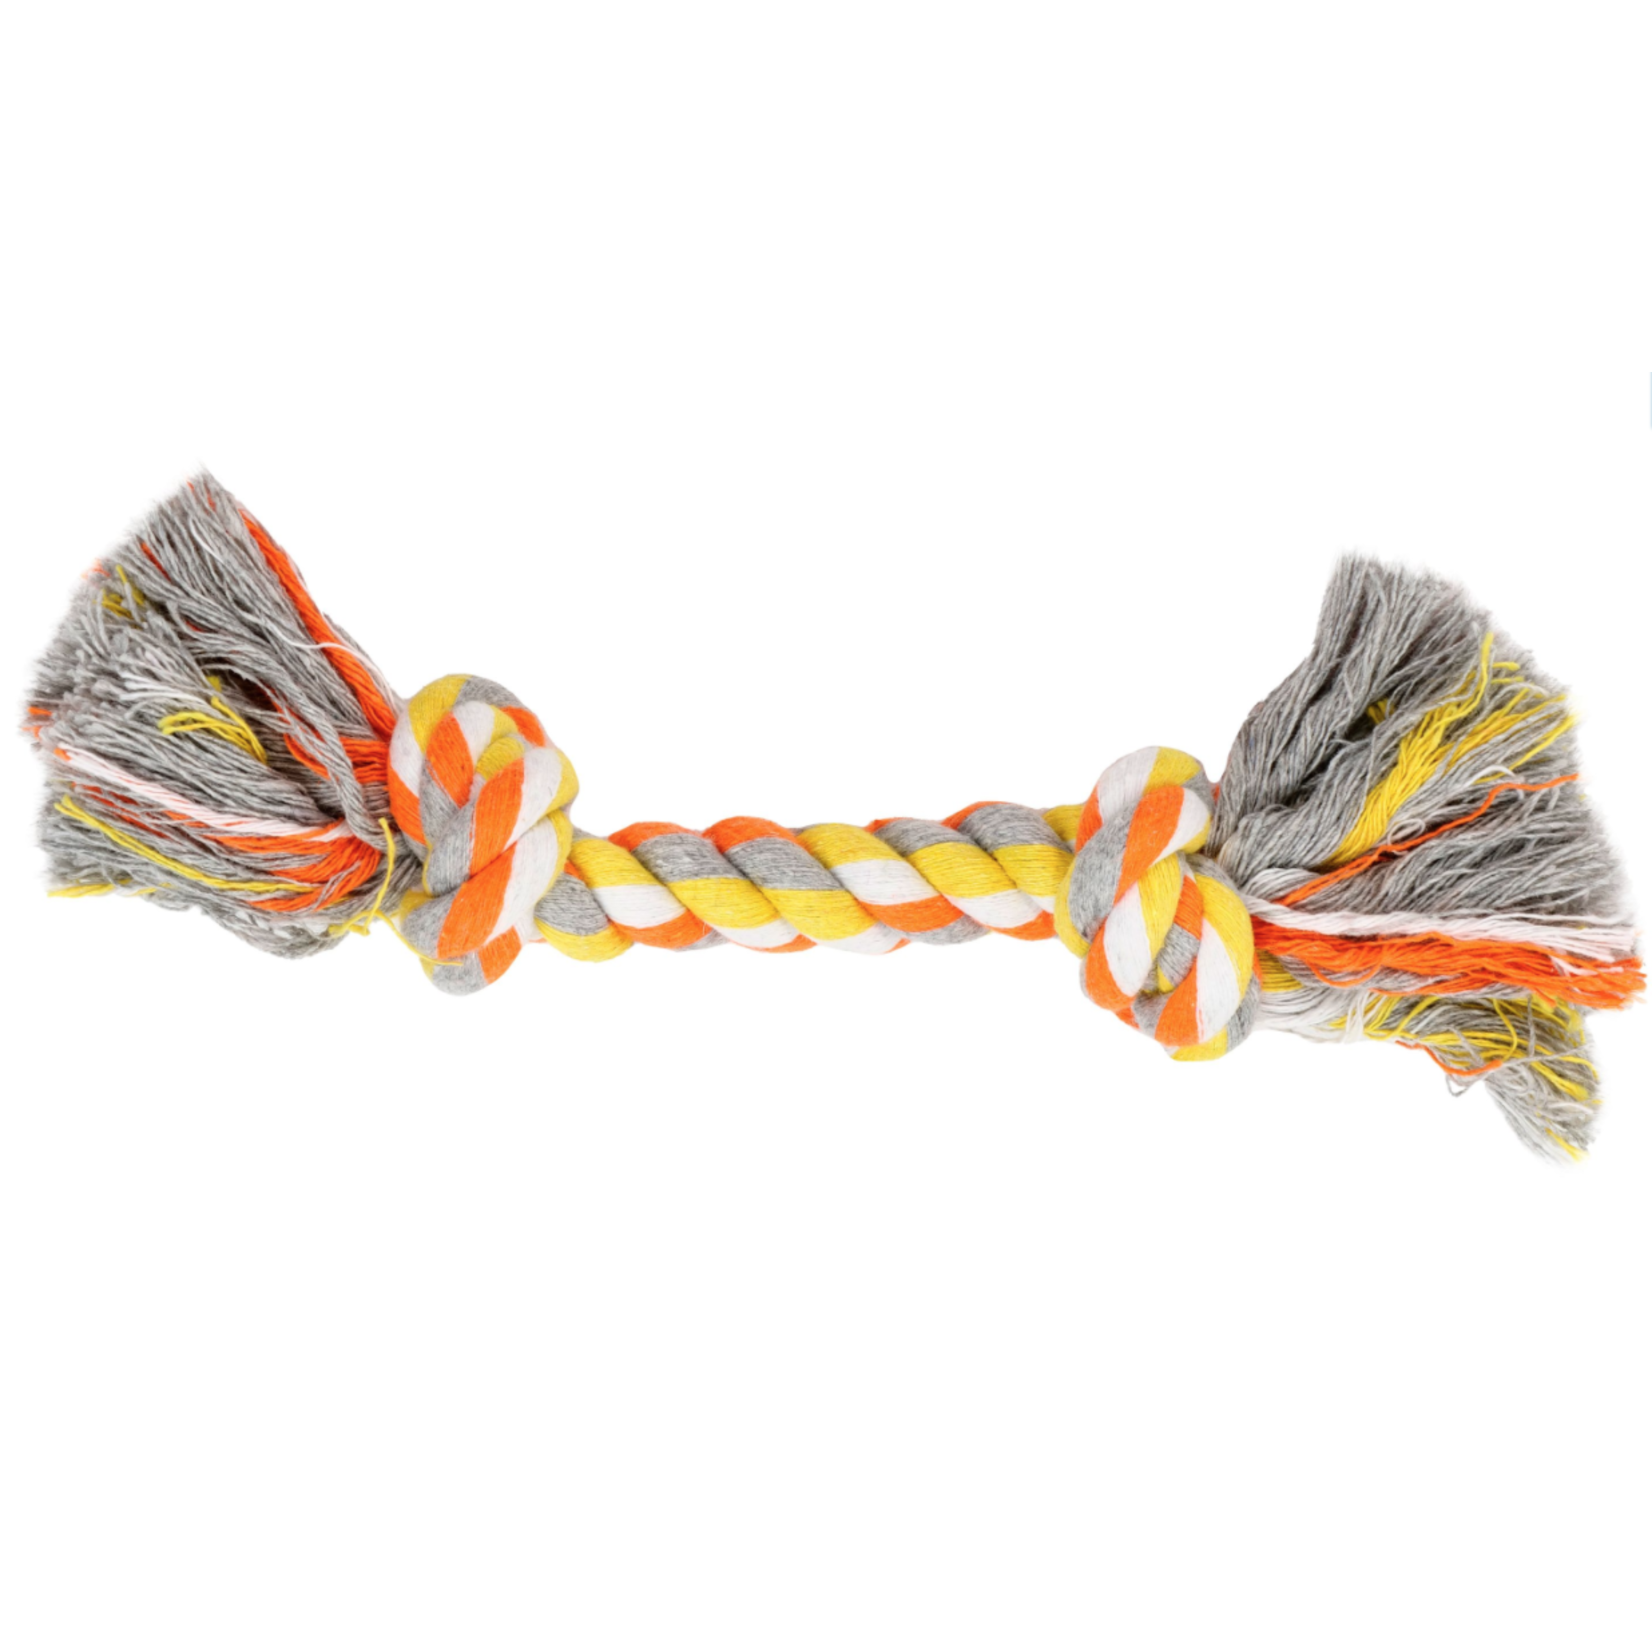 BUD-Z Bud'Z Rope Dog Toy With 2 Knots Orange And Yellow 8.5"